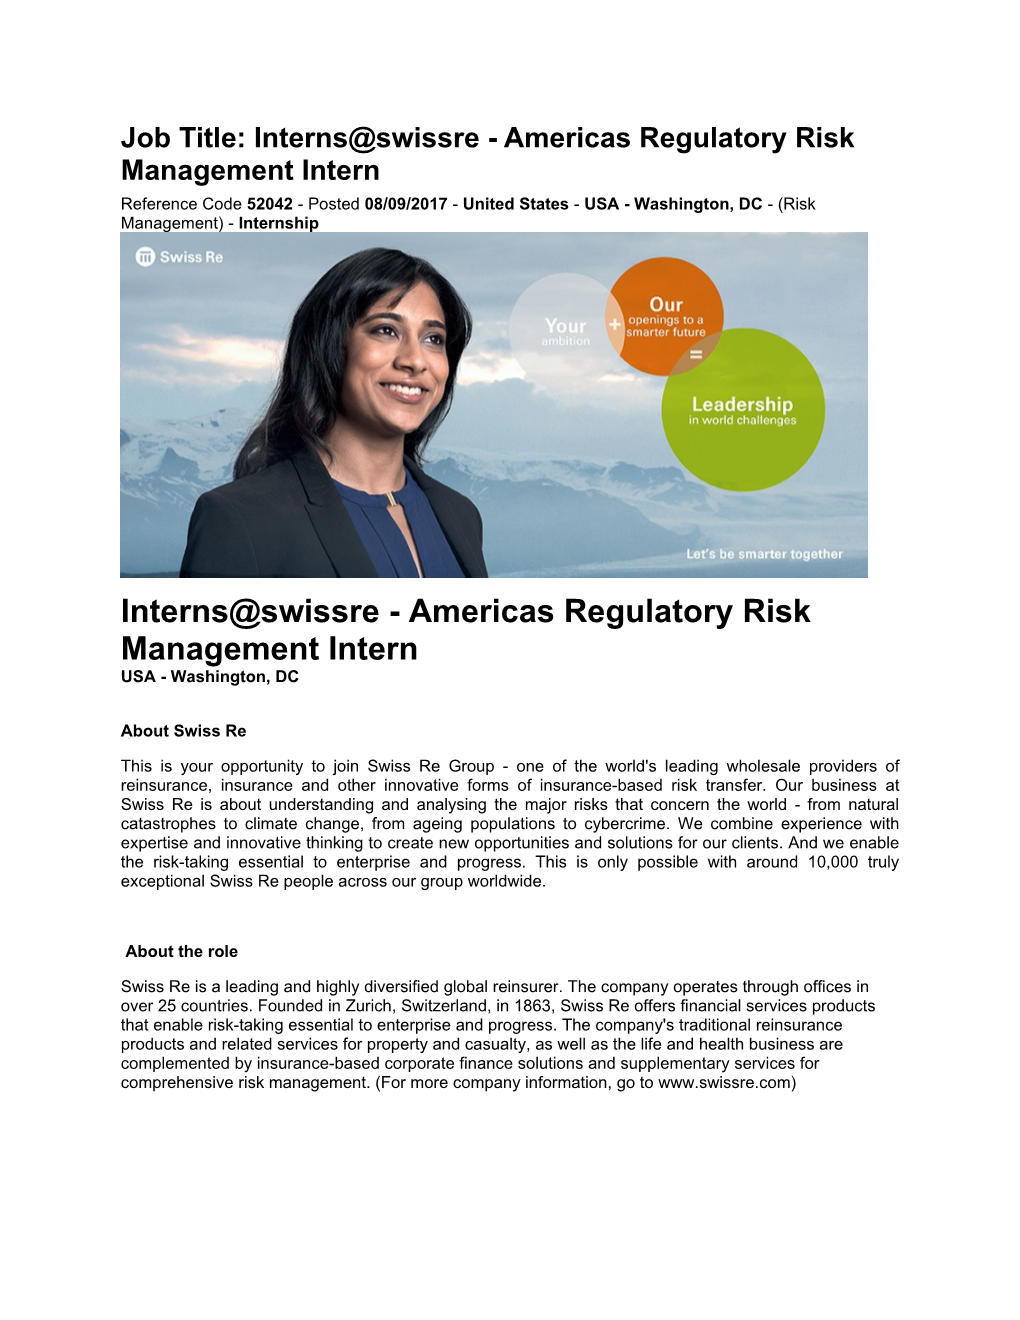 Job Title: Interns Swissre - Americas Regulatory Risk Management Intern